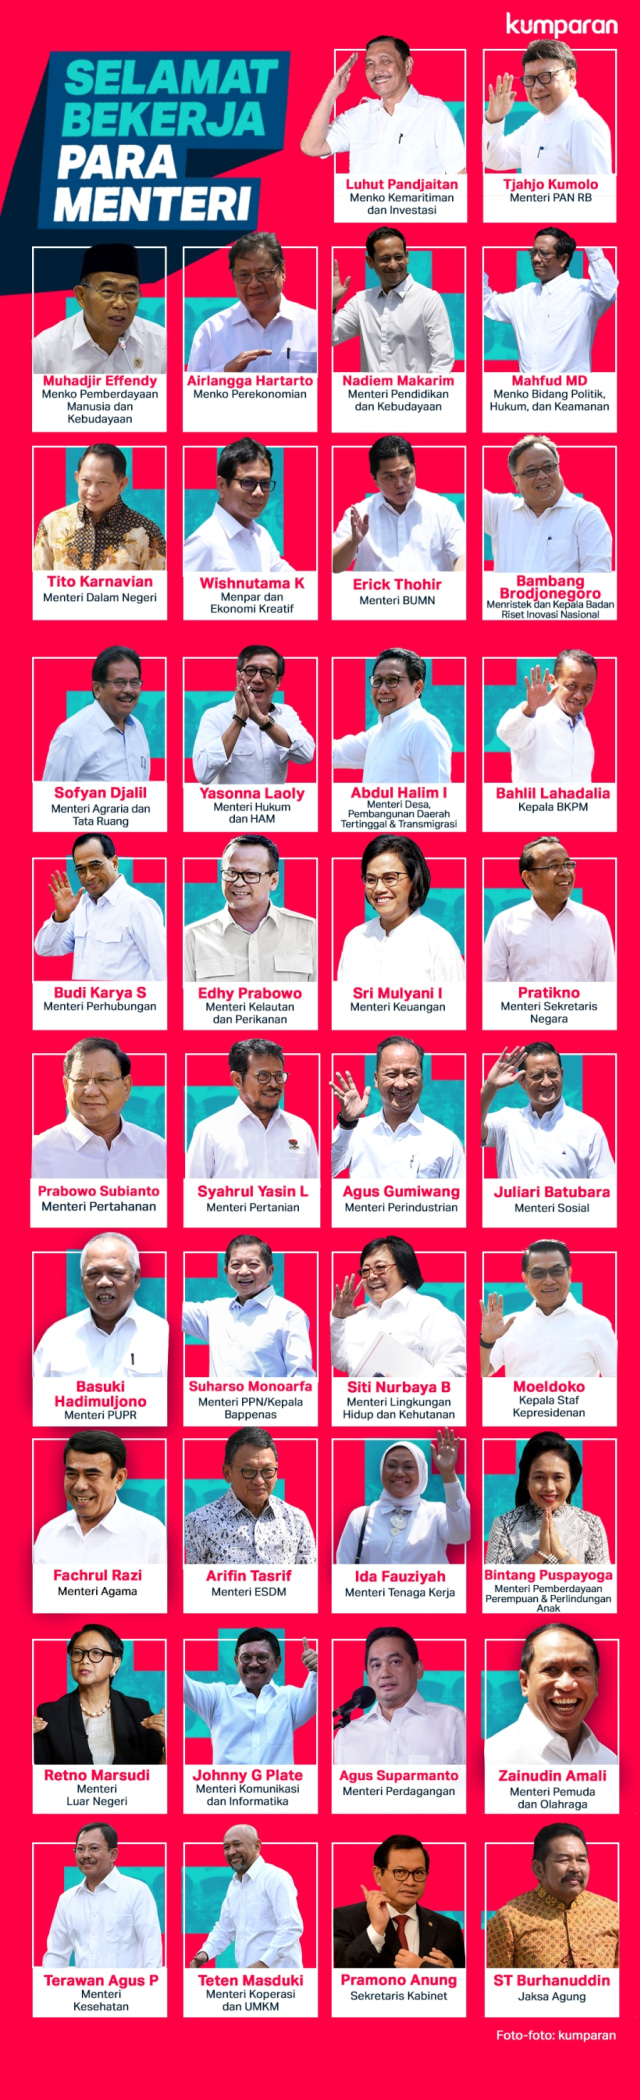 Hanura Kecewa Tak Dapat Jatah di Kabinet  Baru Jokowi 